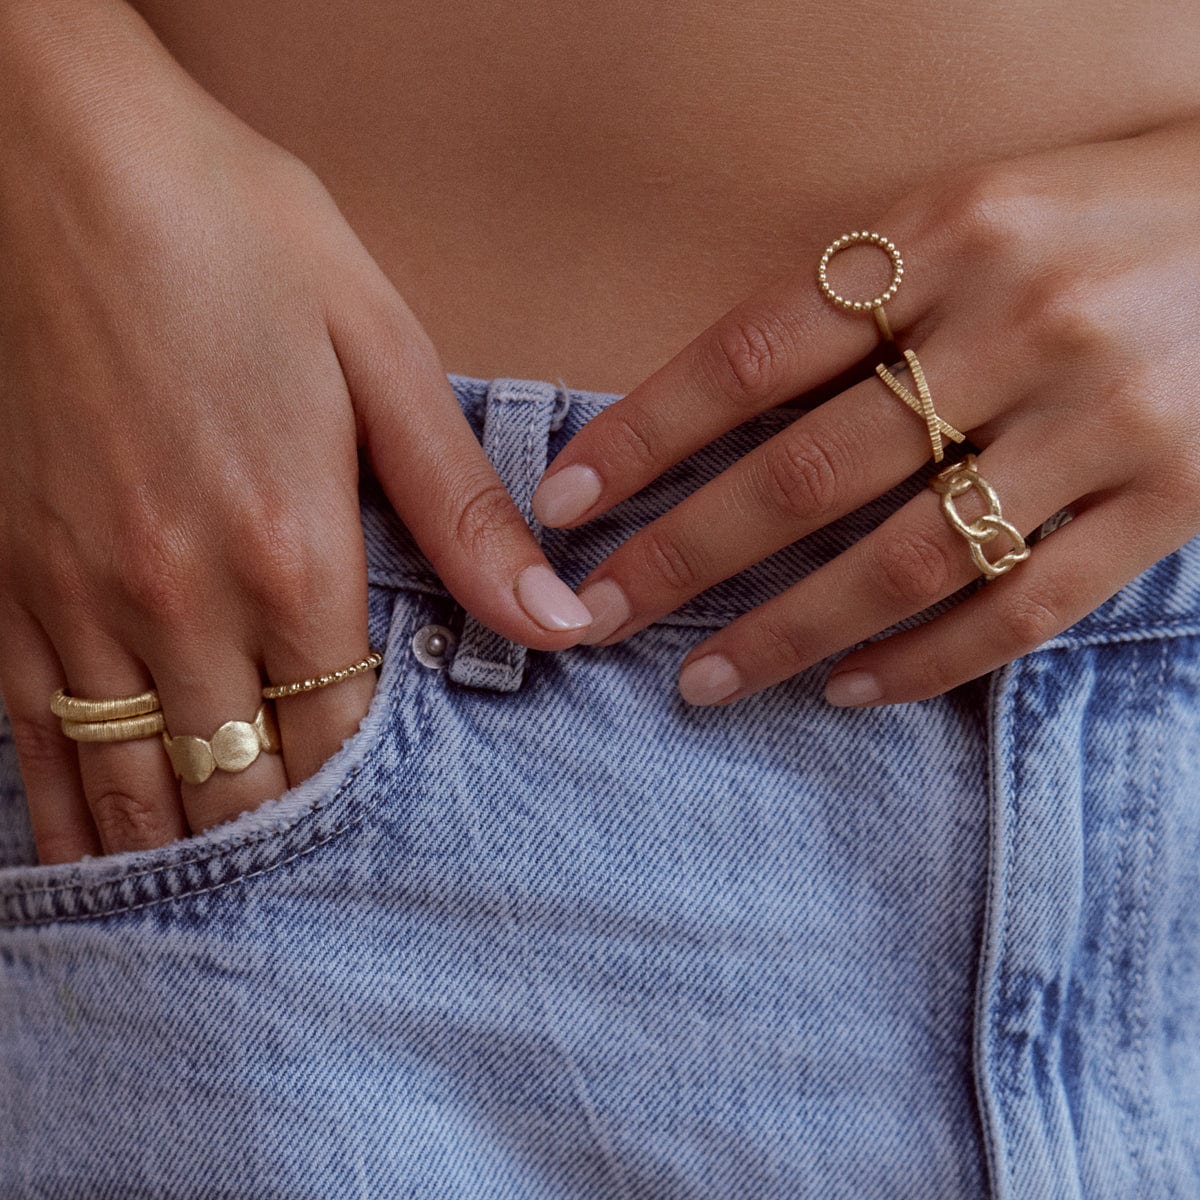 Ring Louise - gold